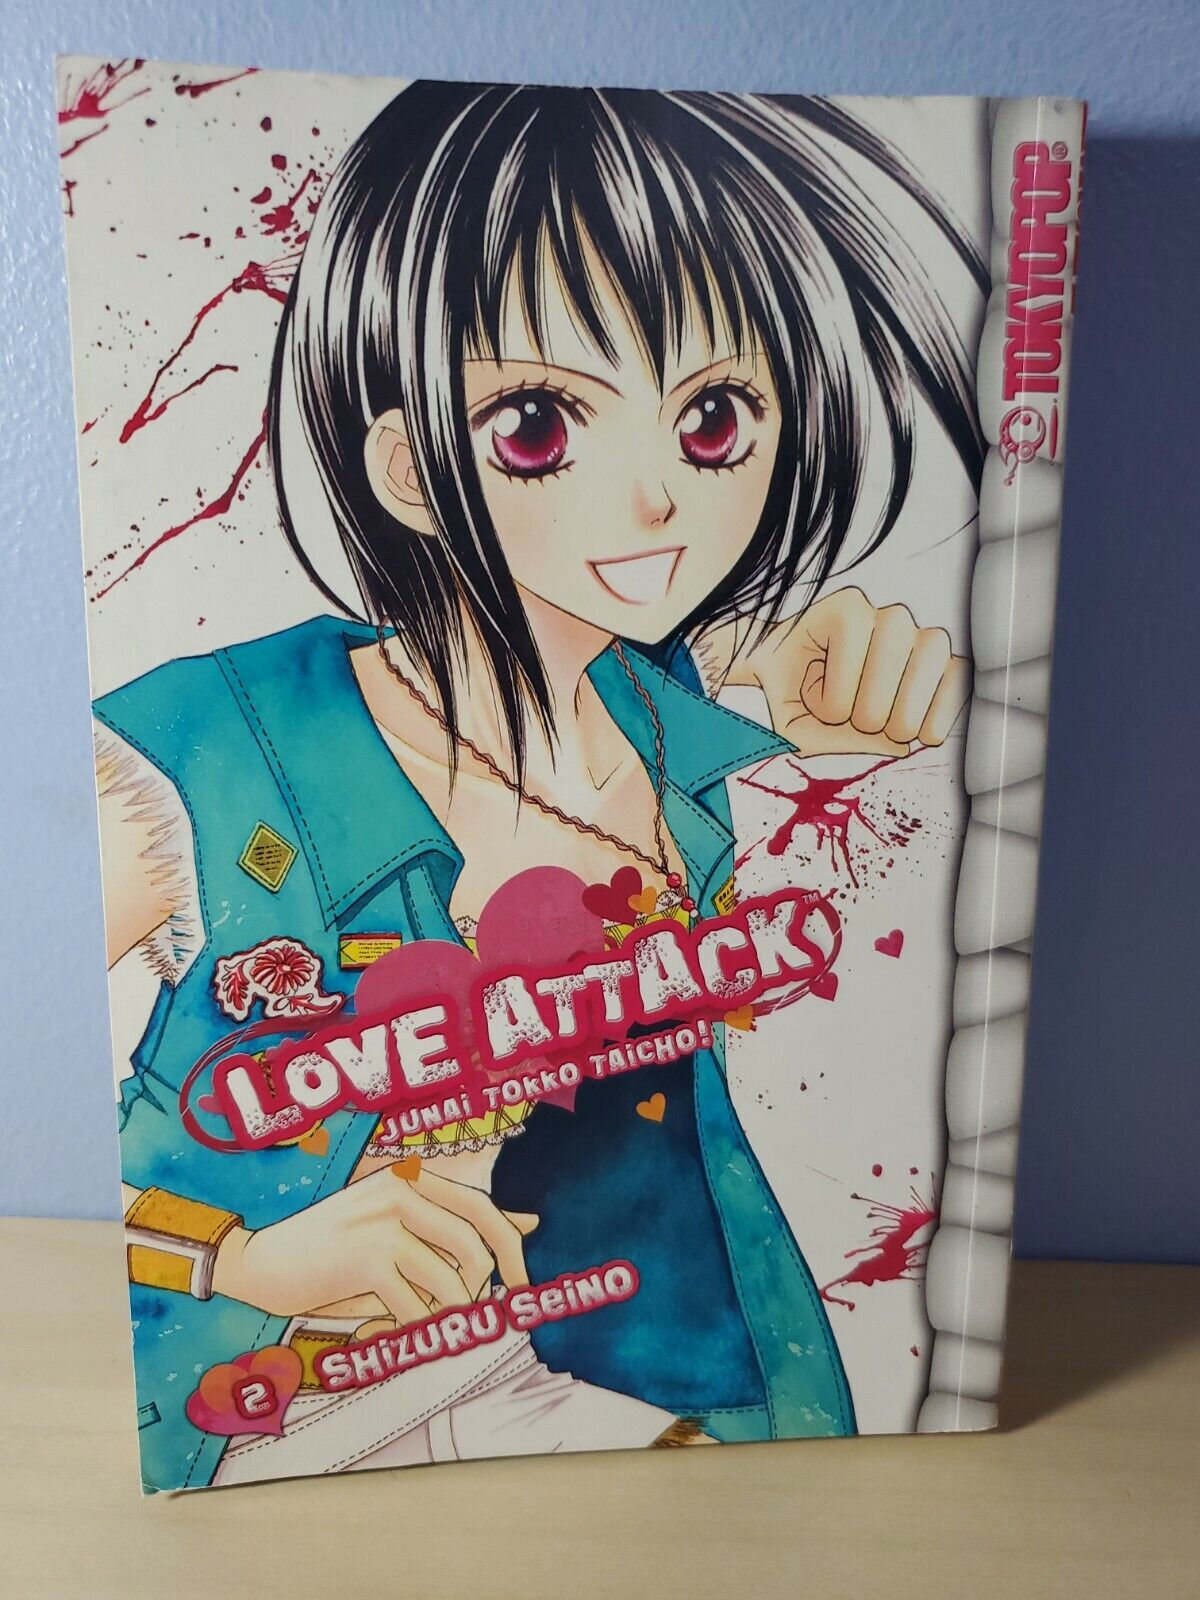 Love Attack by Seino Shizuru (2008, Trade Paperback)